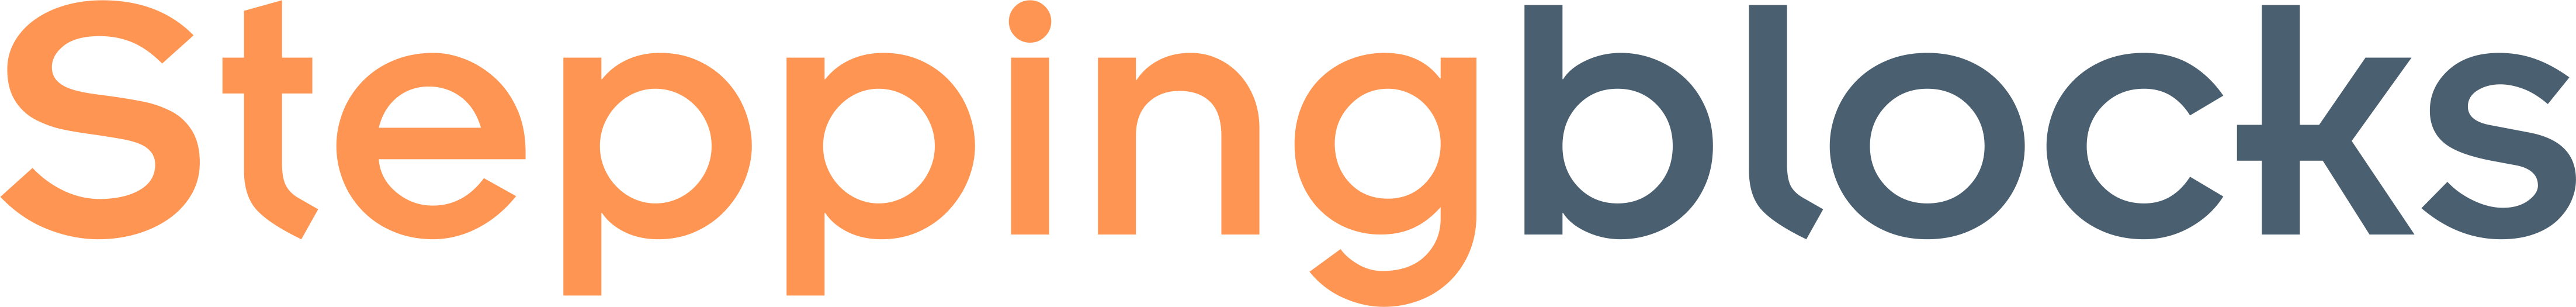 Steppingblocks Logo